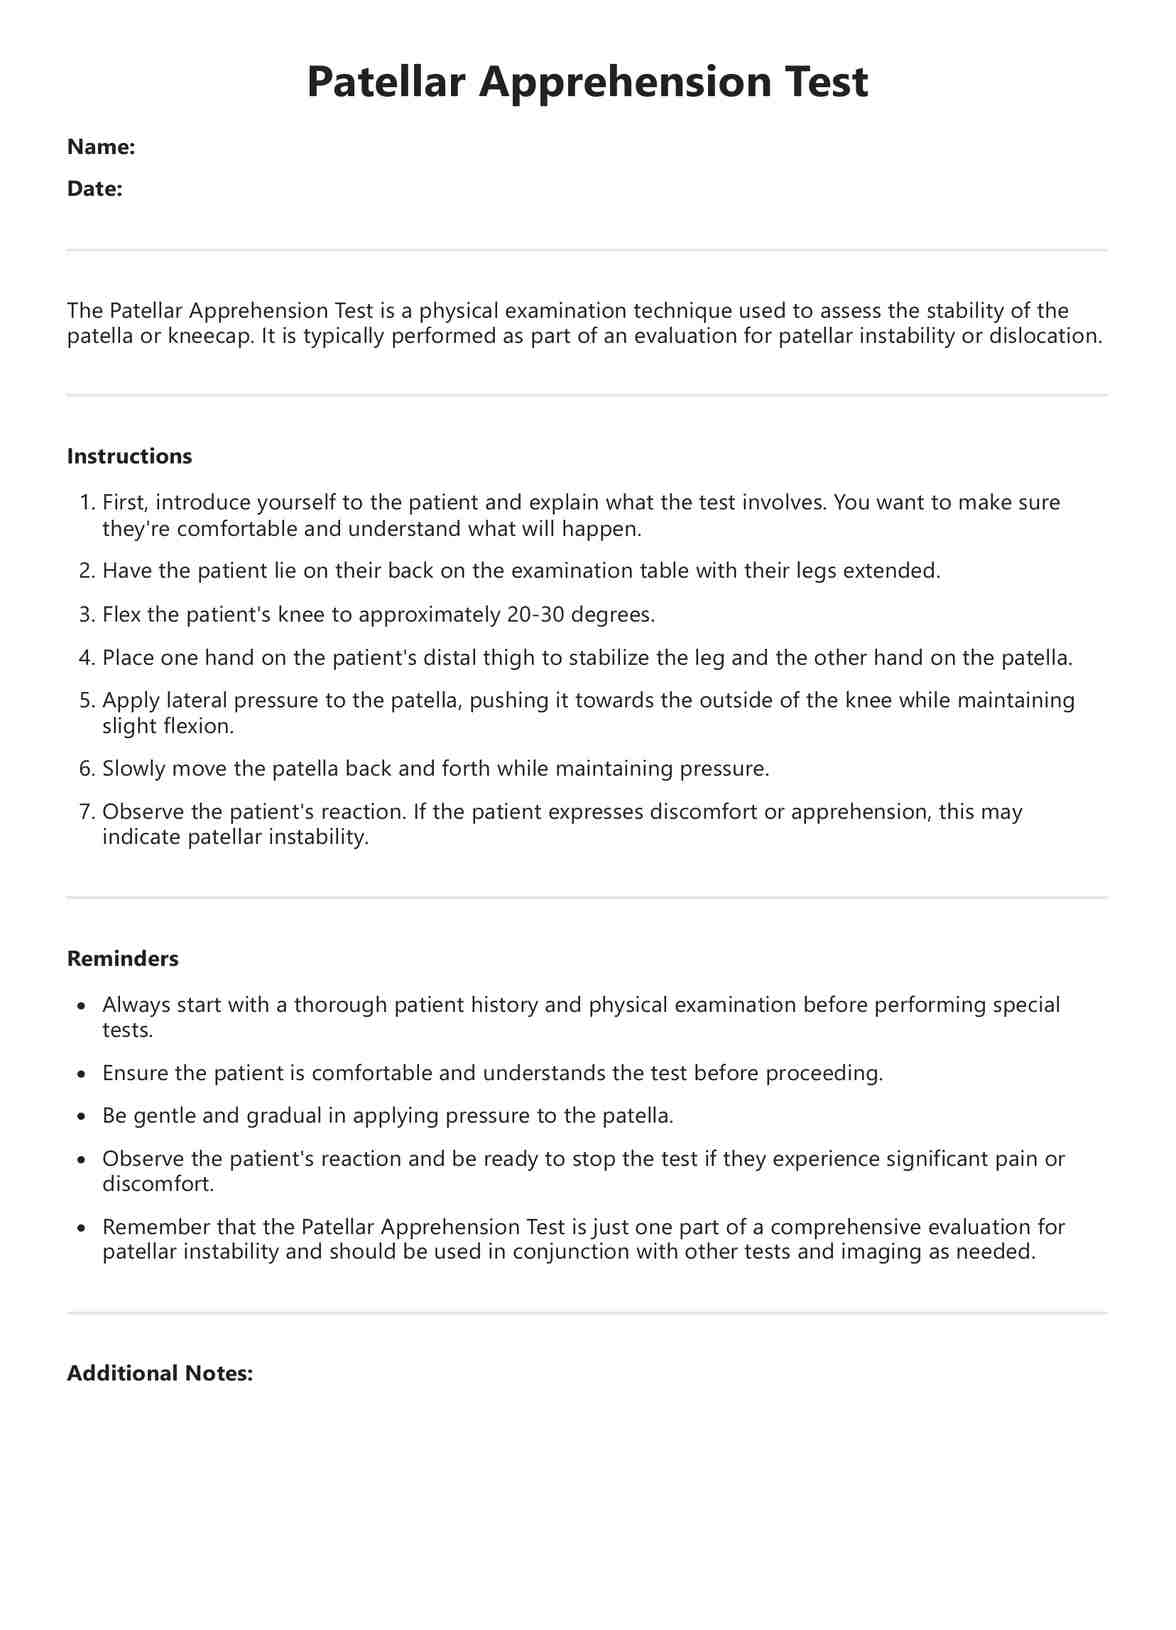 Patellar Apprehension Test PDF Example